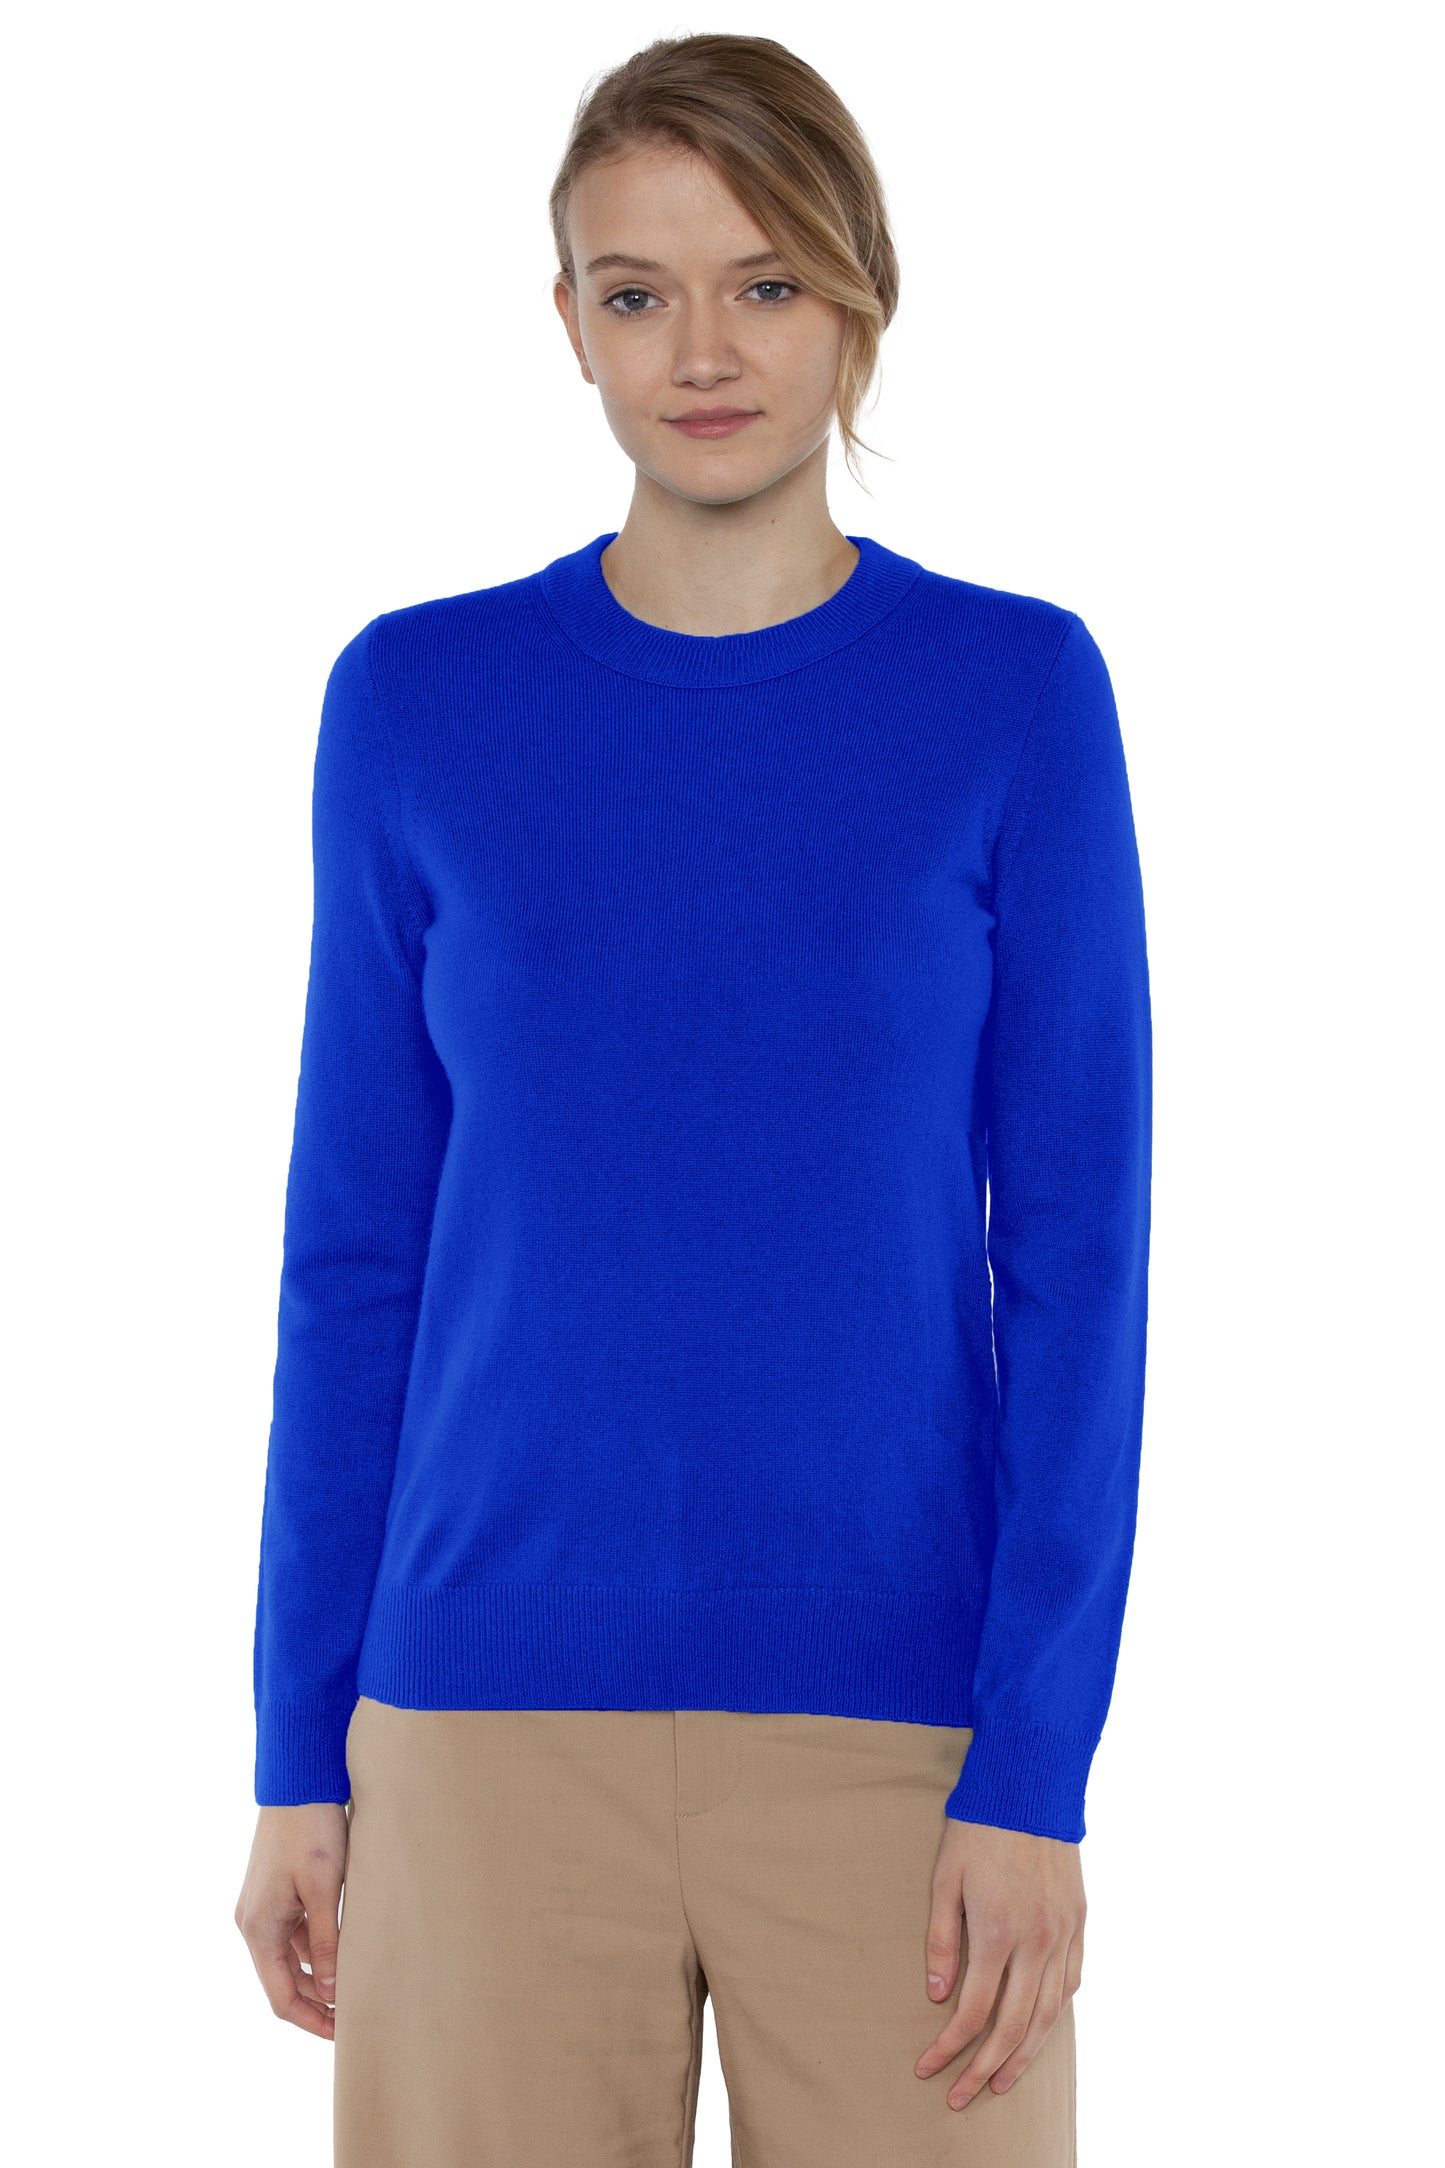 JENNIE LIU Women's 100% Cashmere Long Sleeve Crew Neck Sweater